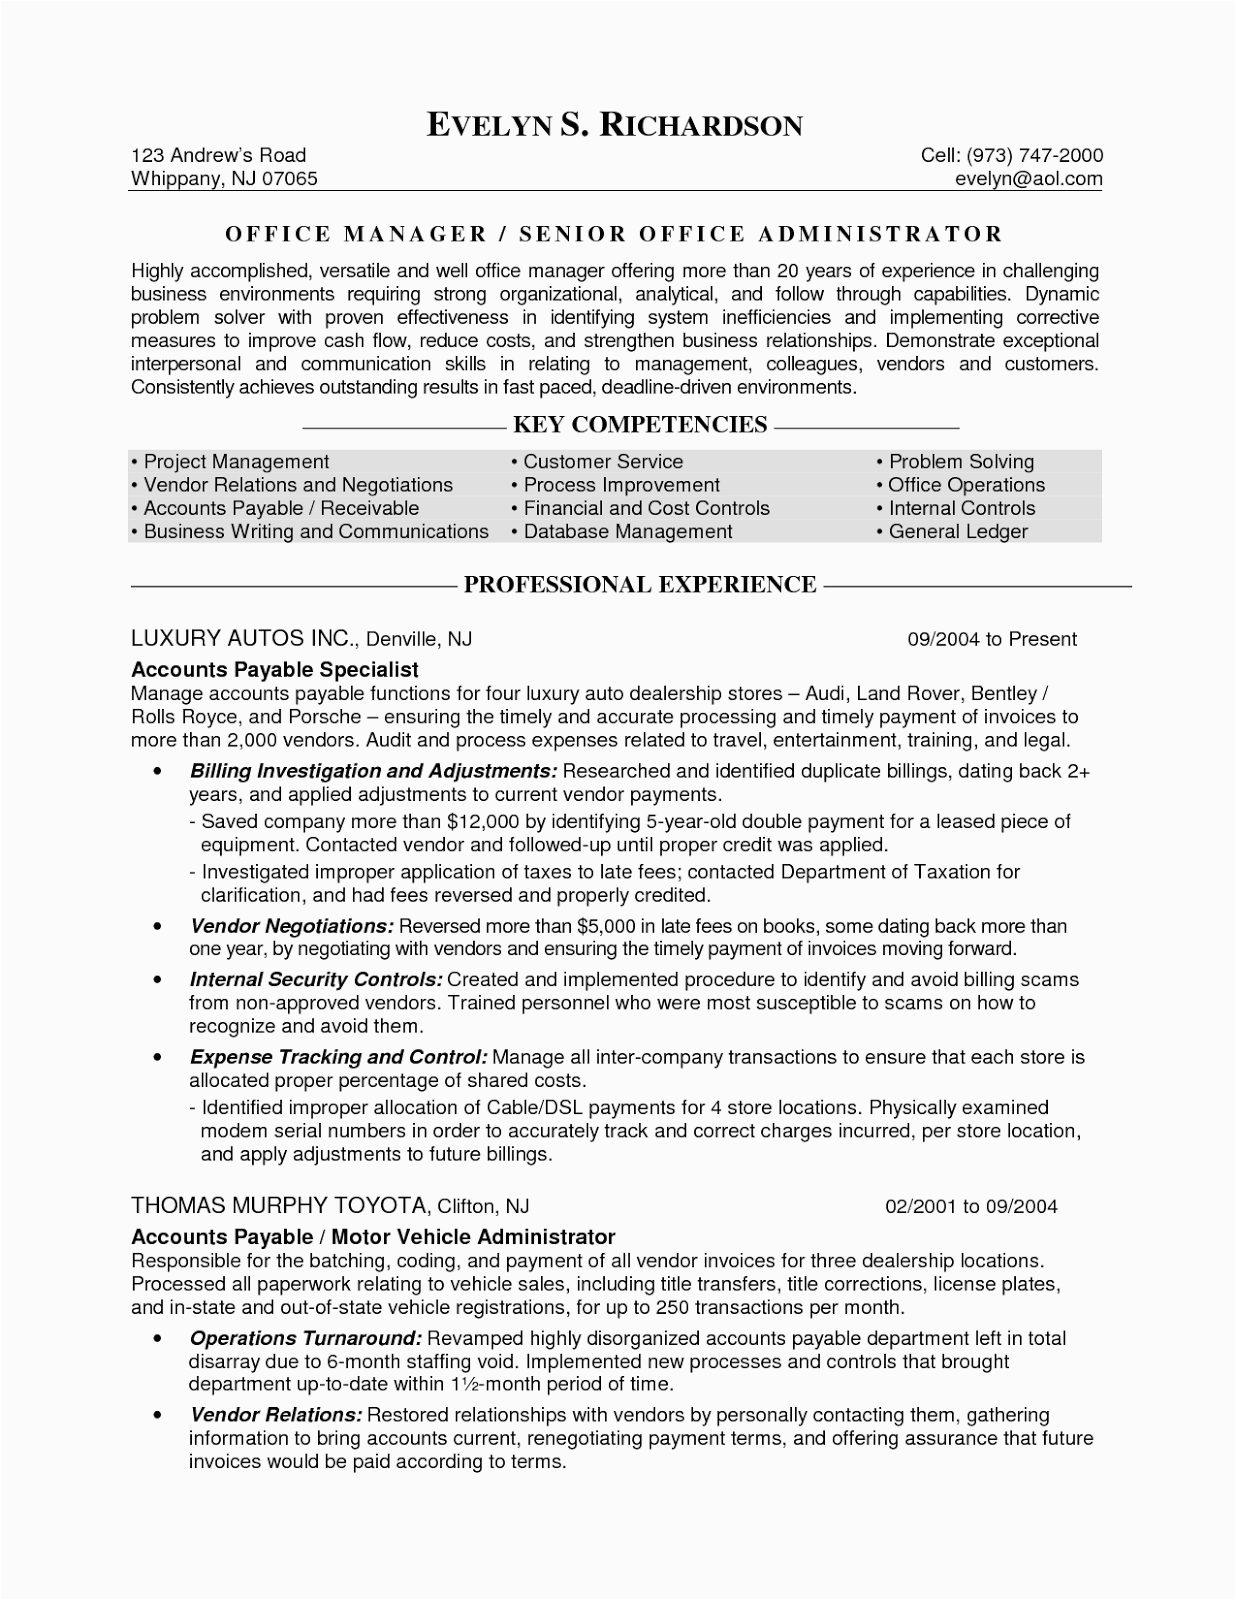 Sample Resume for Office Administration Job Fice Admin Resume Samples